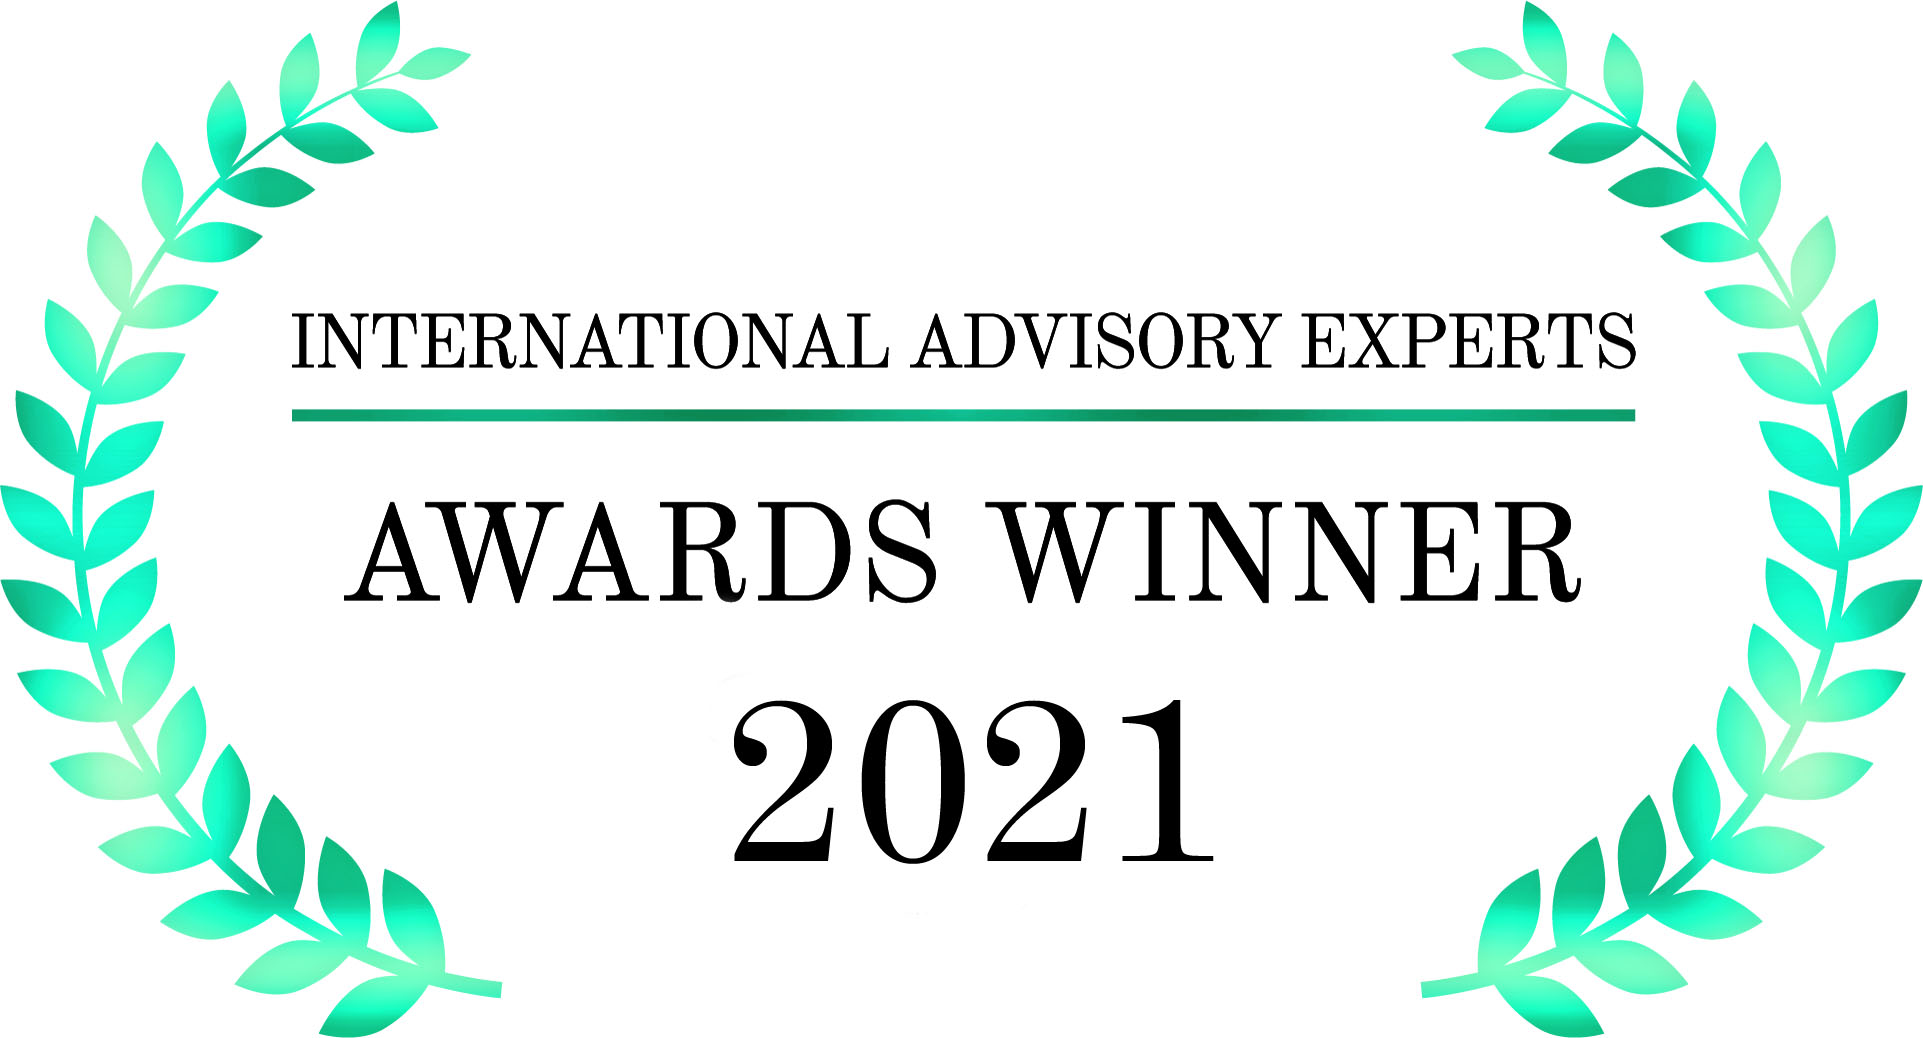 International Advisory Experts Awards winner